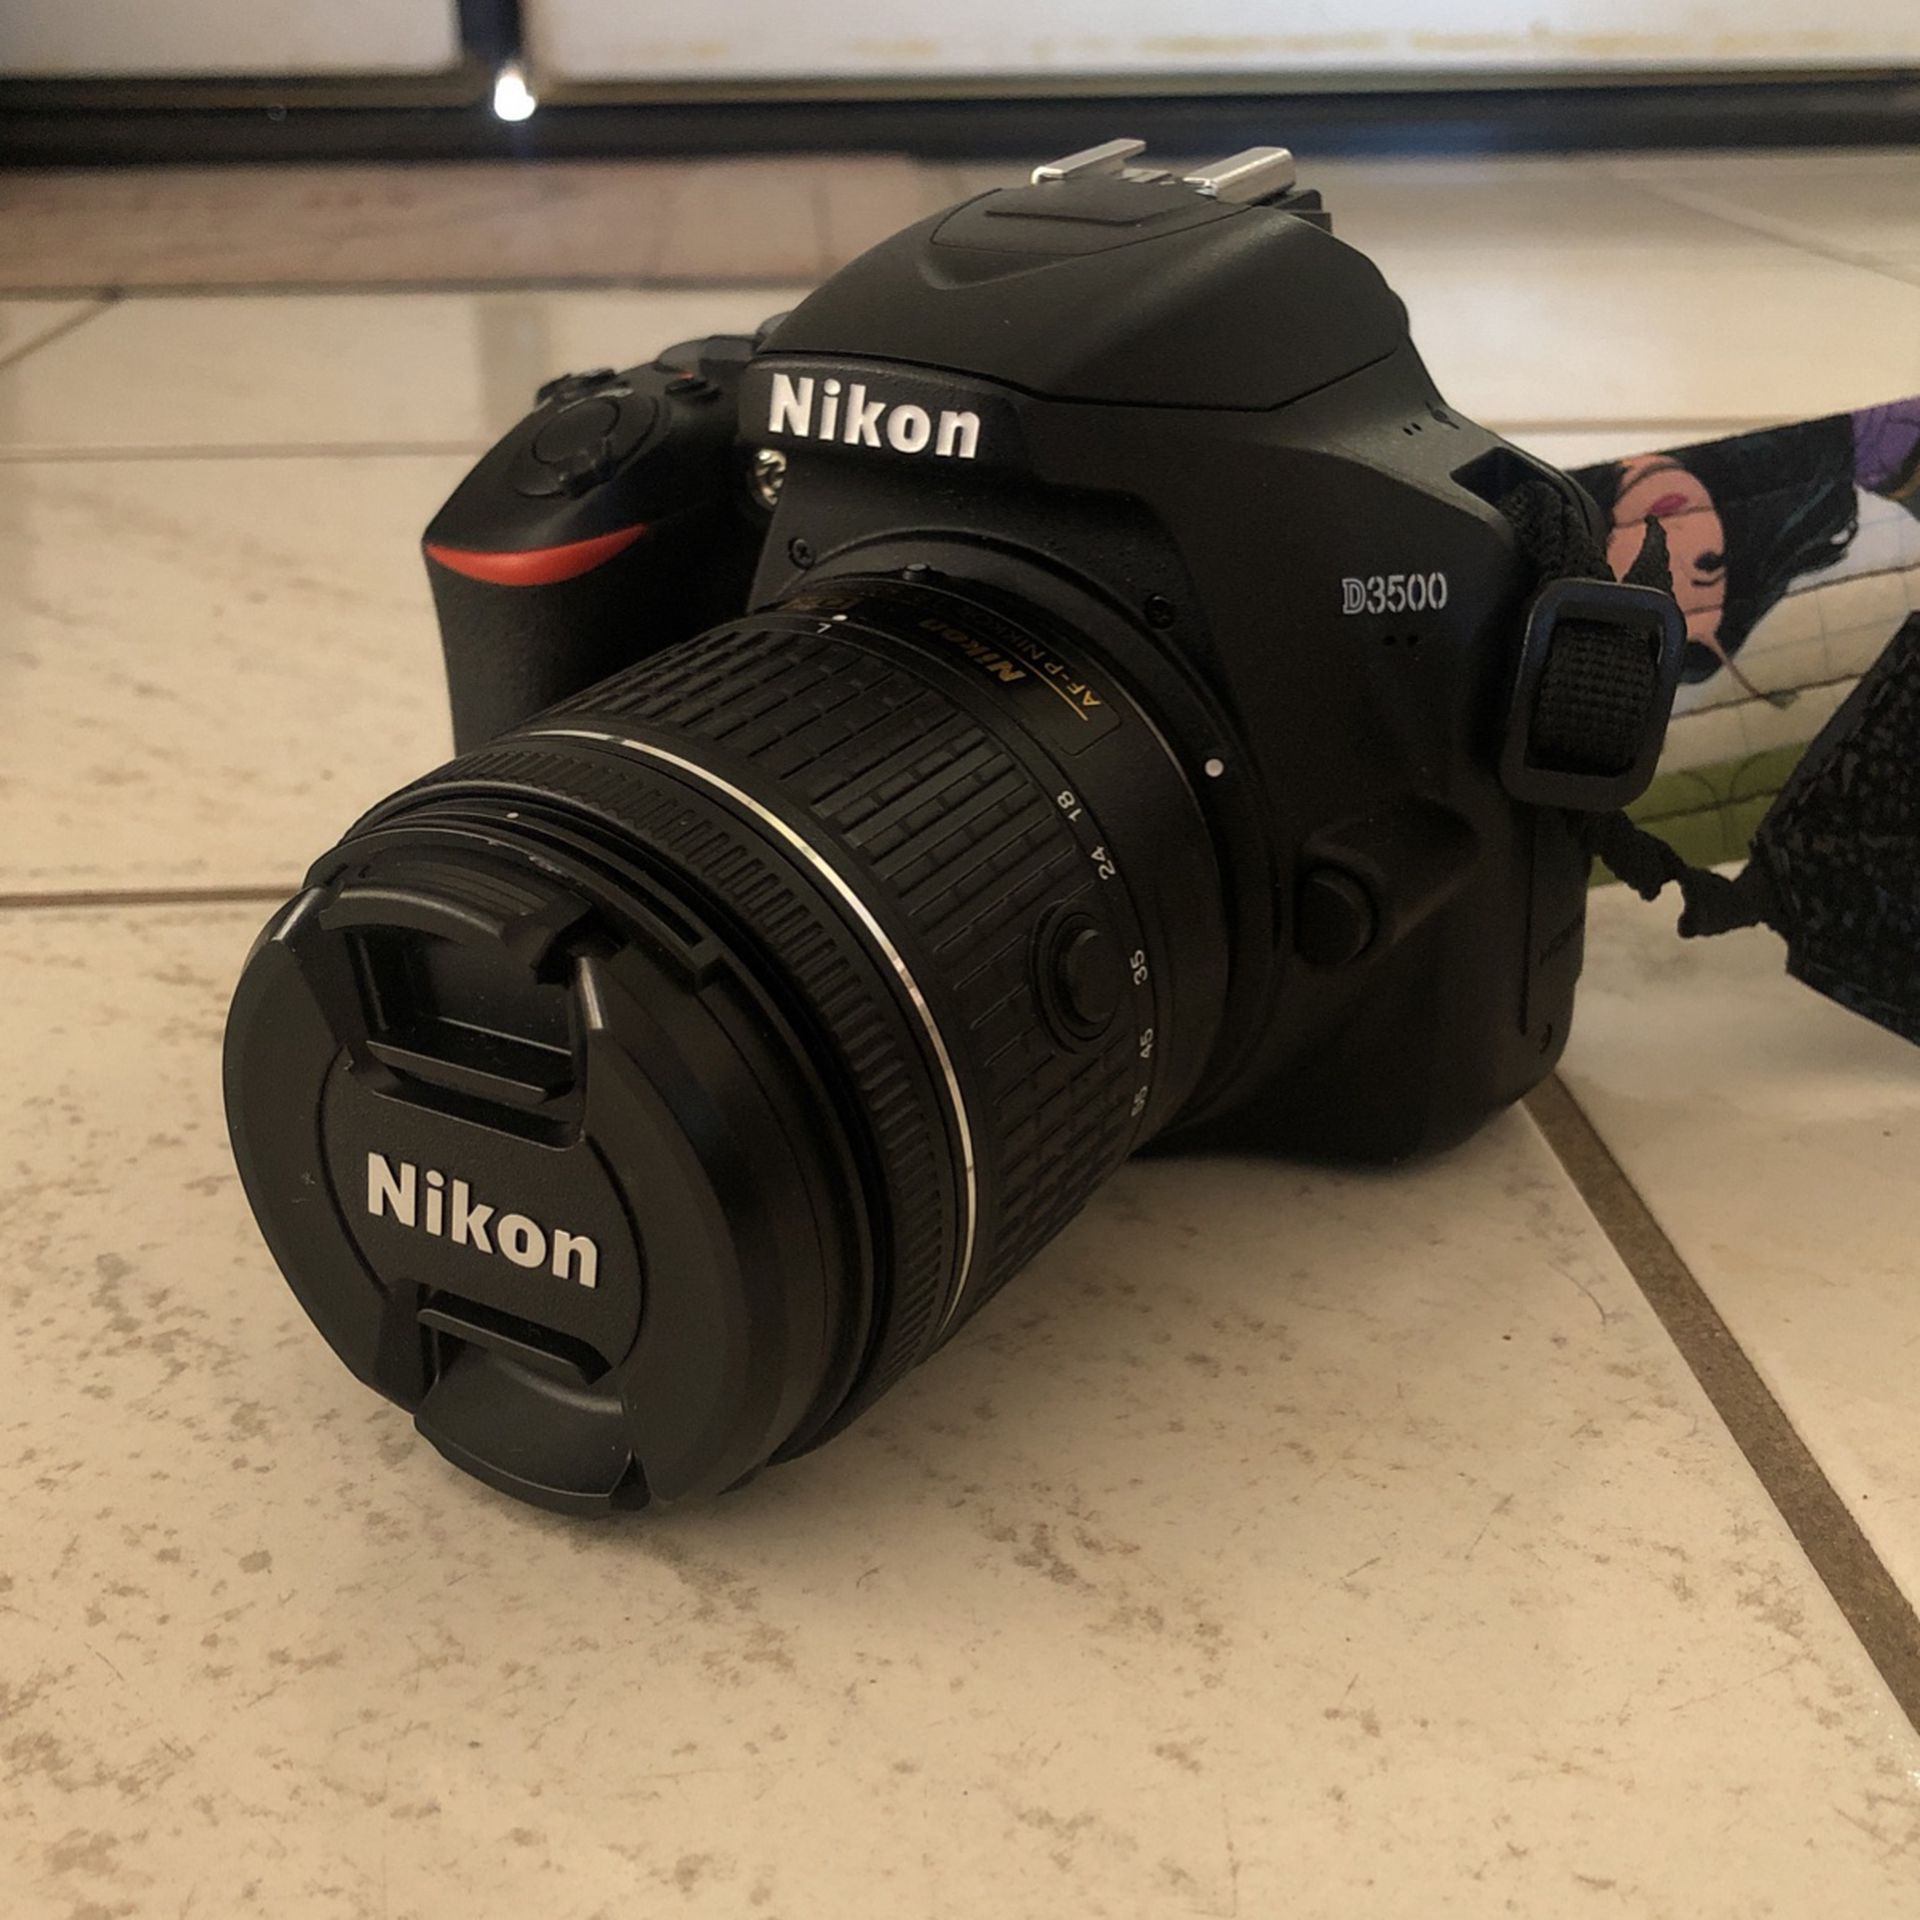 Nikon D3500 DSLR with Stock Lens